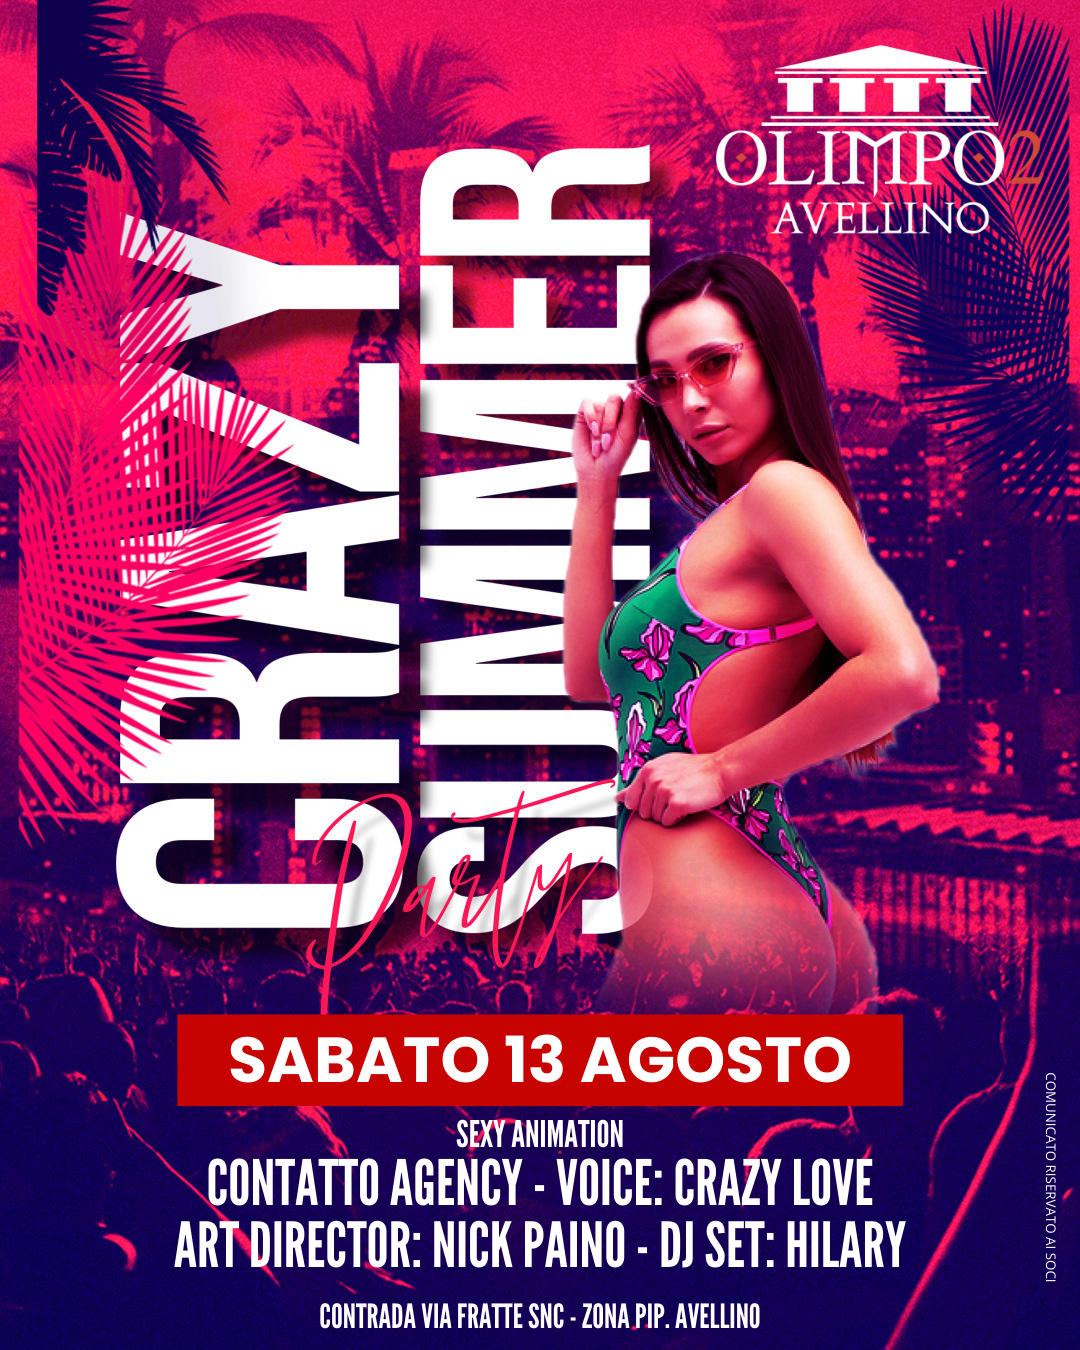 crazy summer party olimpo 2 avellino